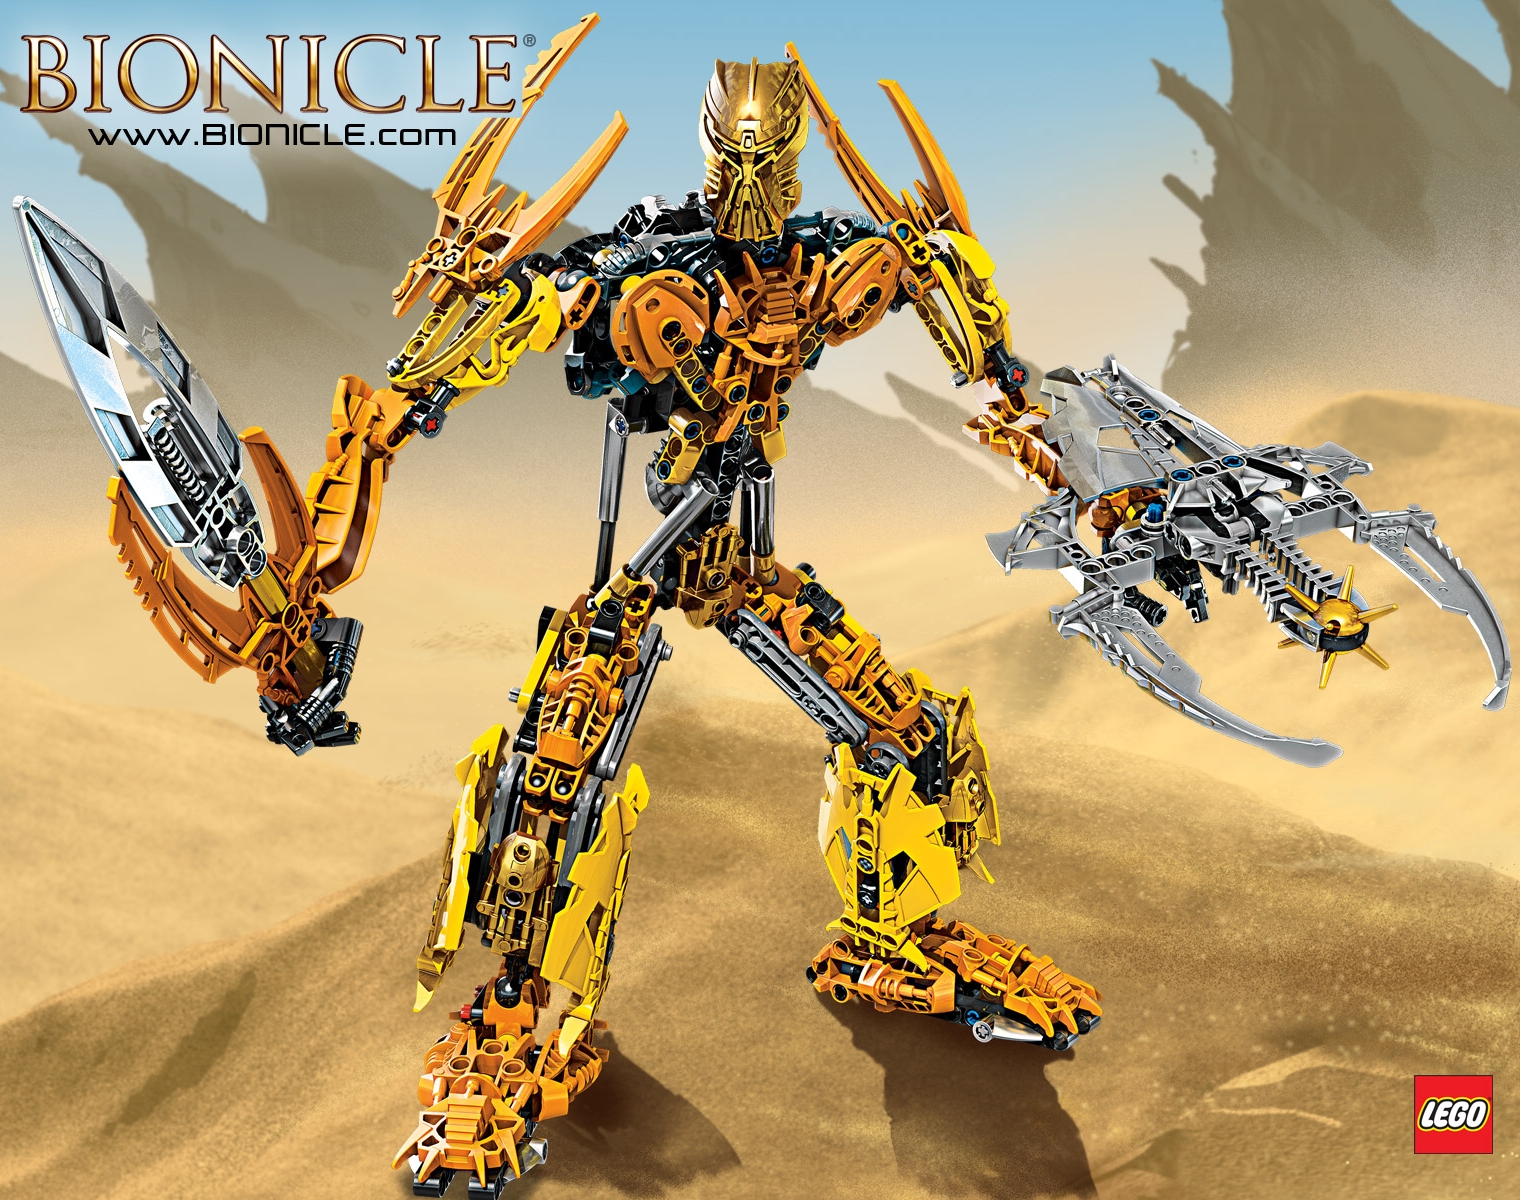 mata-nui-bionicle-sets-and-creations-wiki-fandom-powered-by-wikia